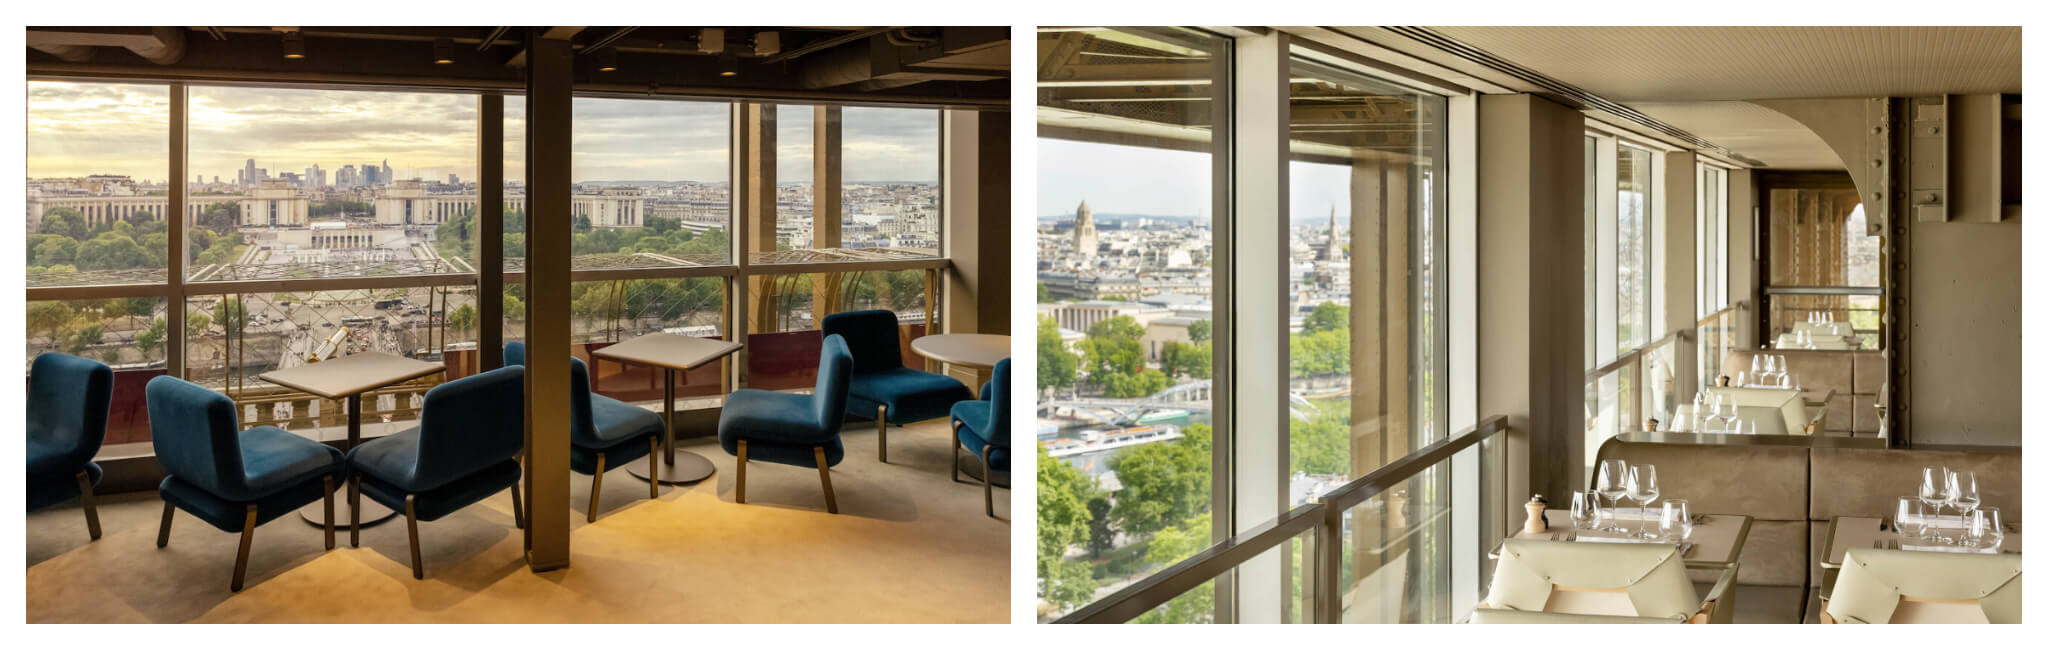 The interior of Madame Brasserie Restaurant with panoramic views of Paris.